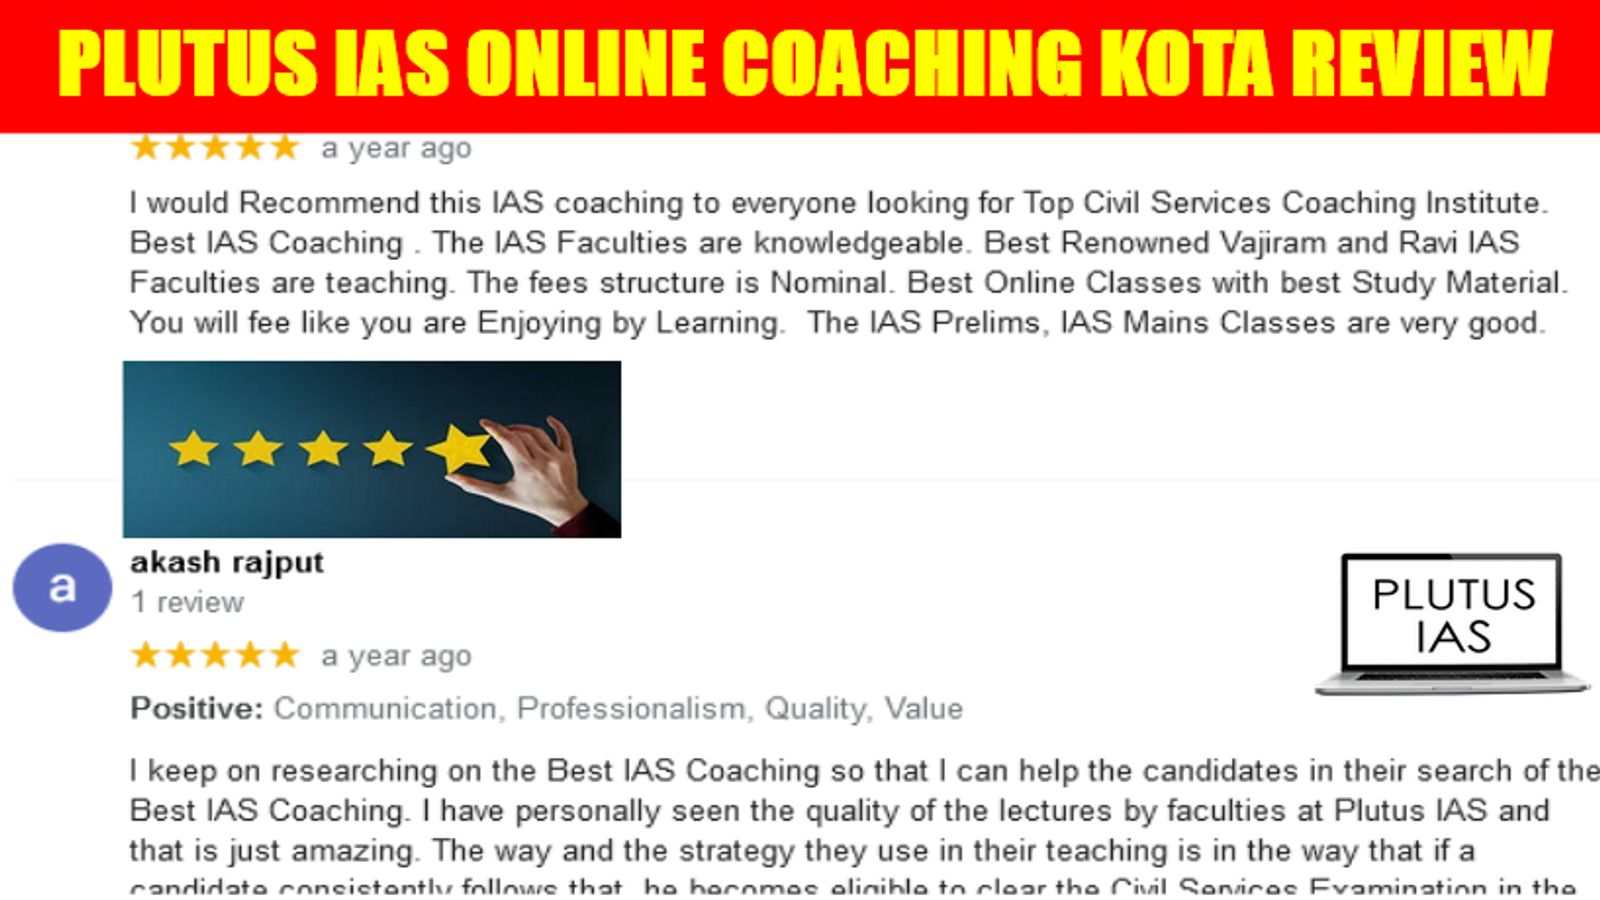 Plutus IAS Online Coaching Kota Review